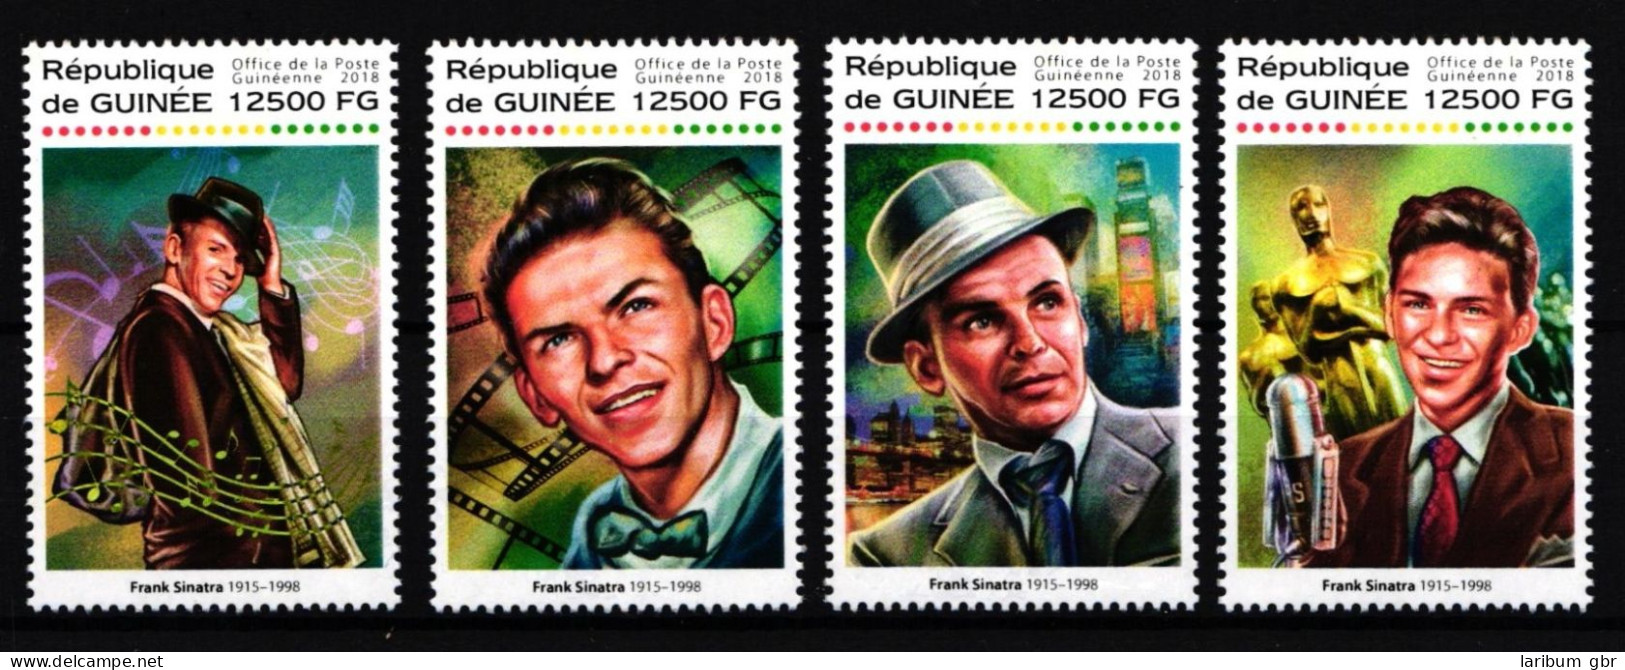 Guinea 13010-13013 Postfrisch Frank Sinatra #IH620 - Guinea (1958-...)